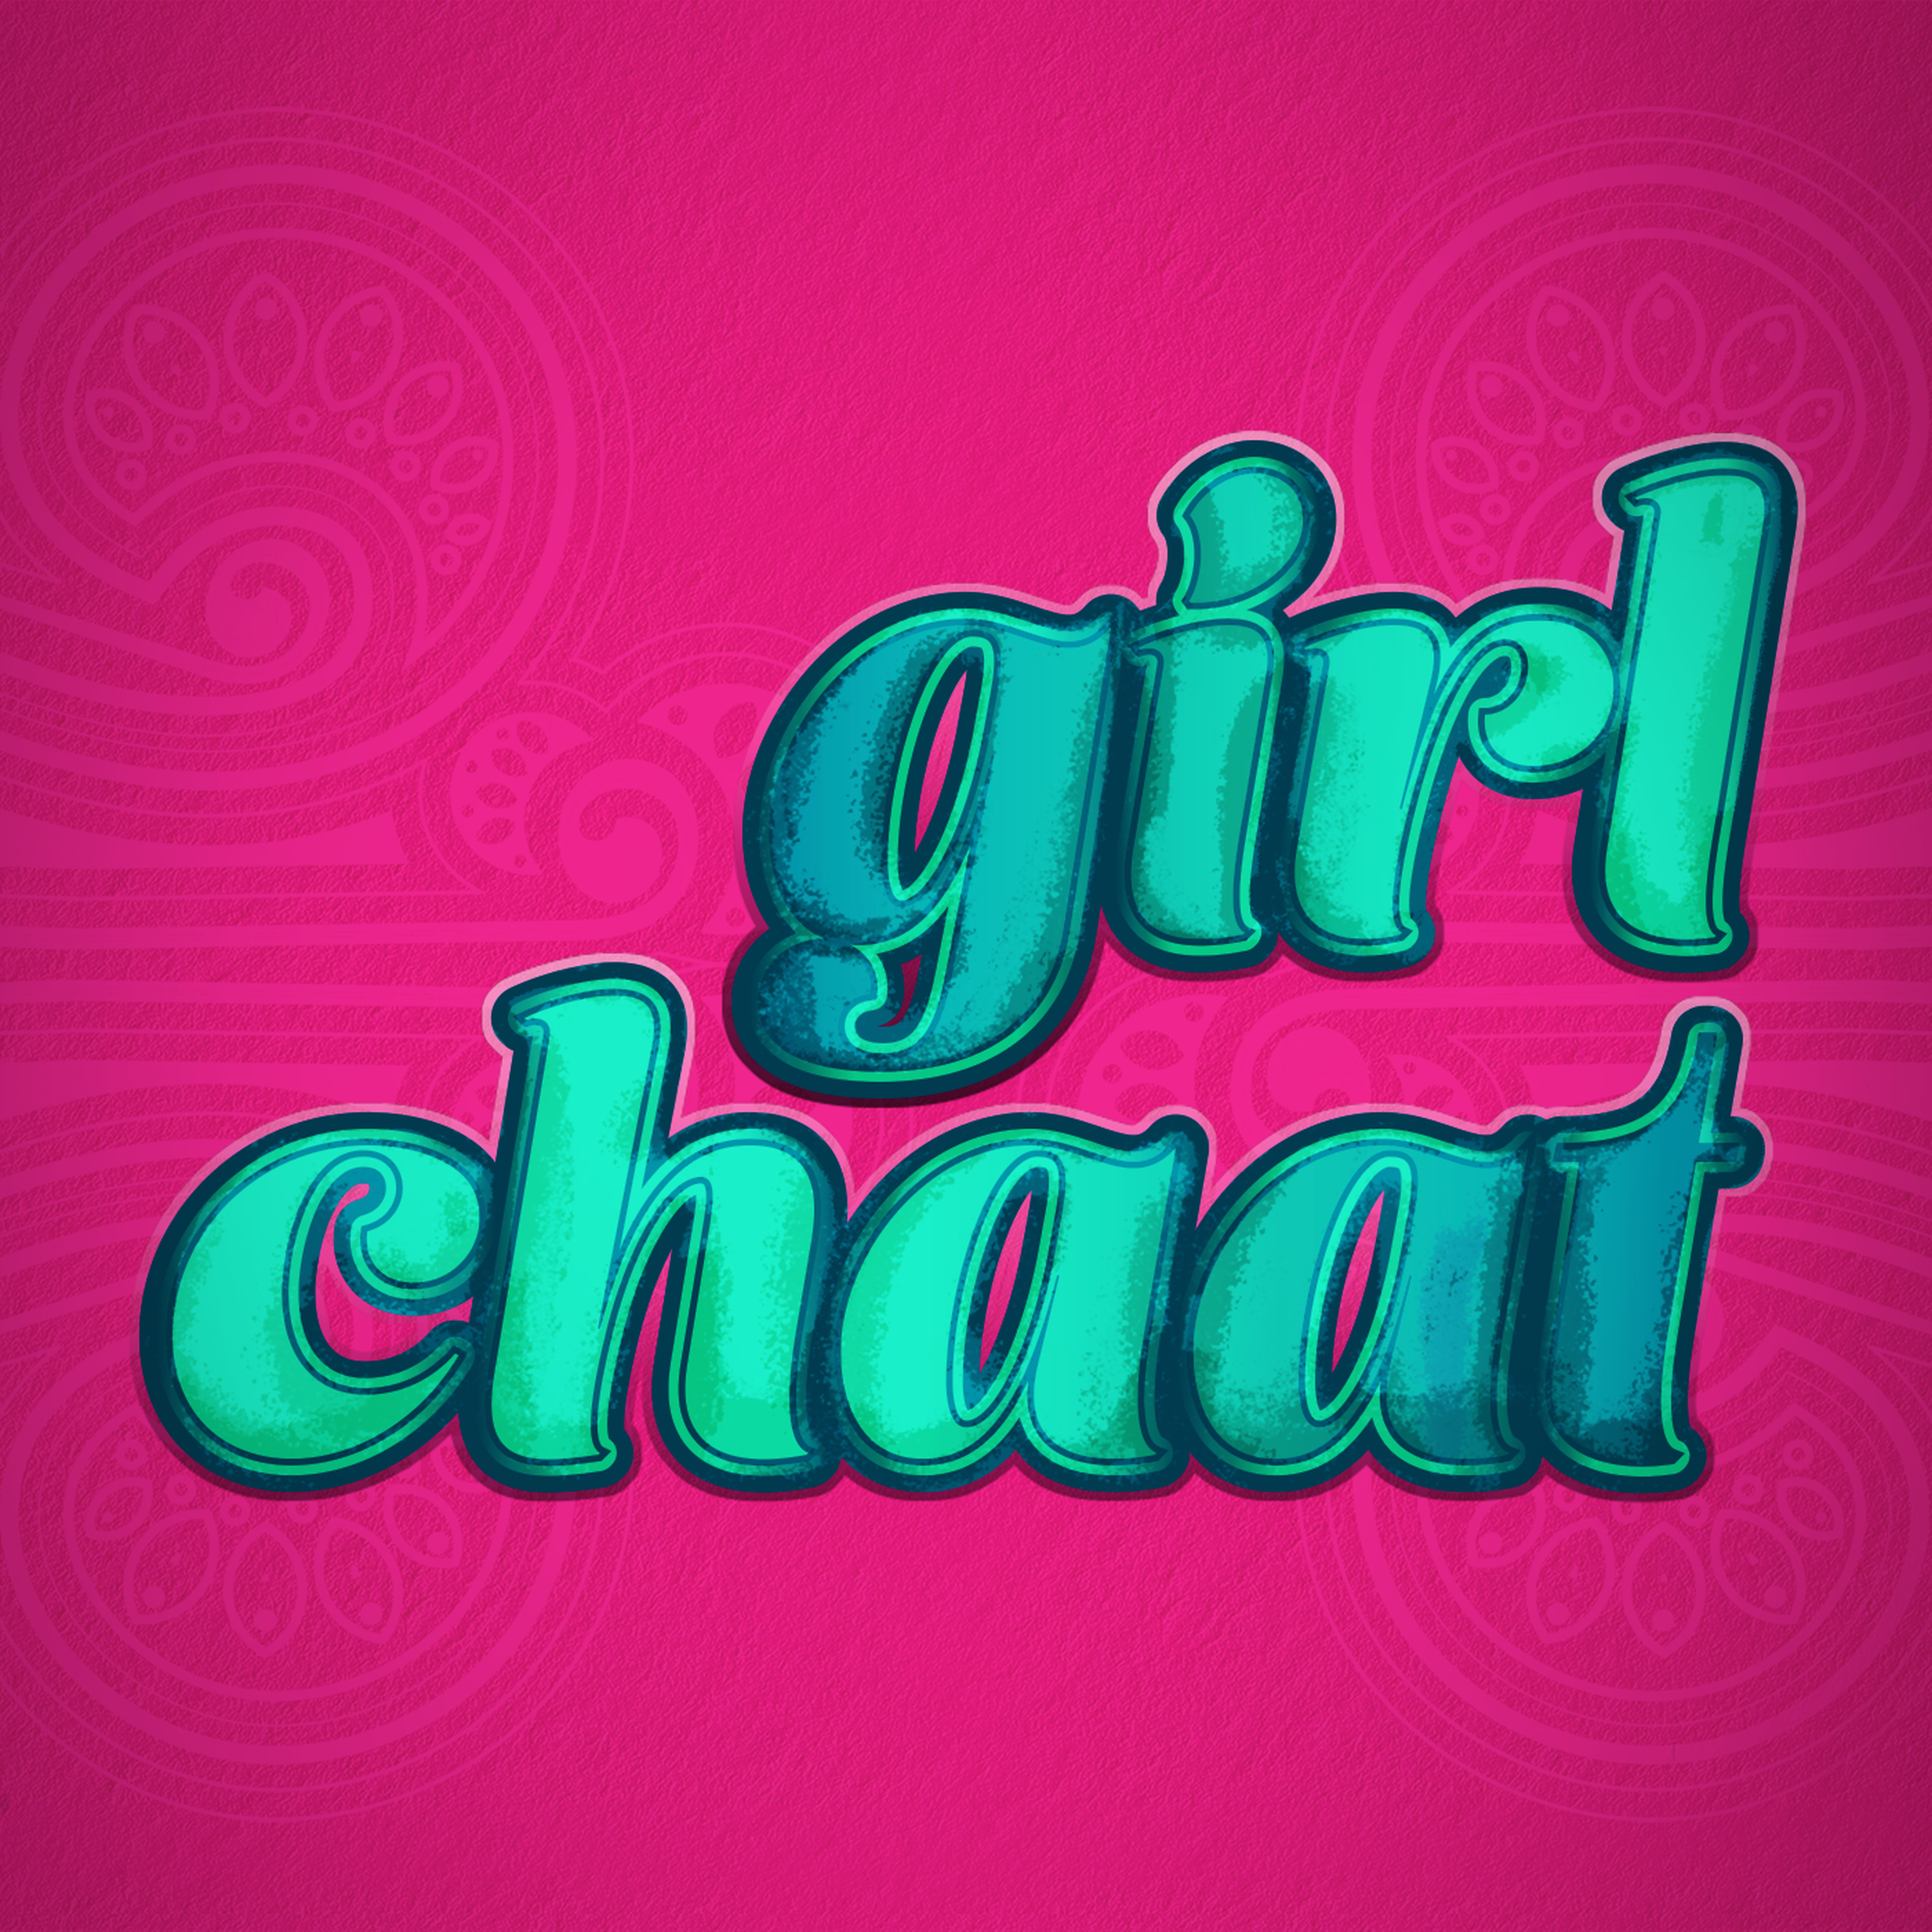 Girl Chaat - Coming Soon.